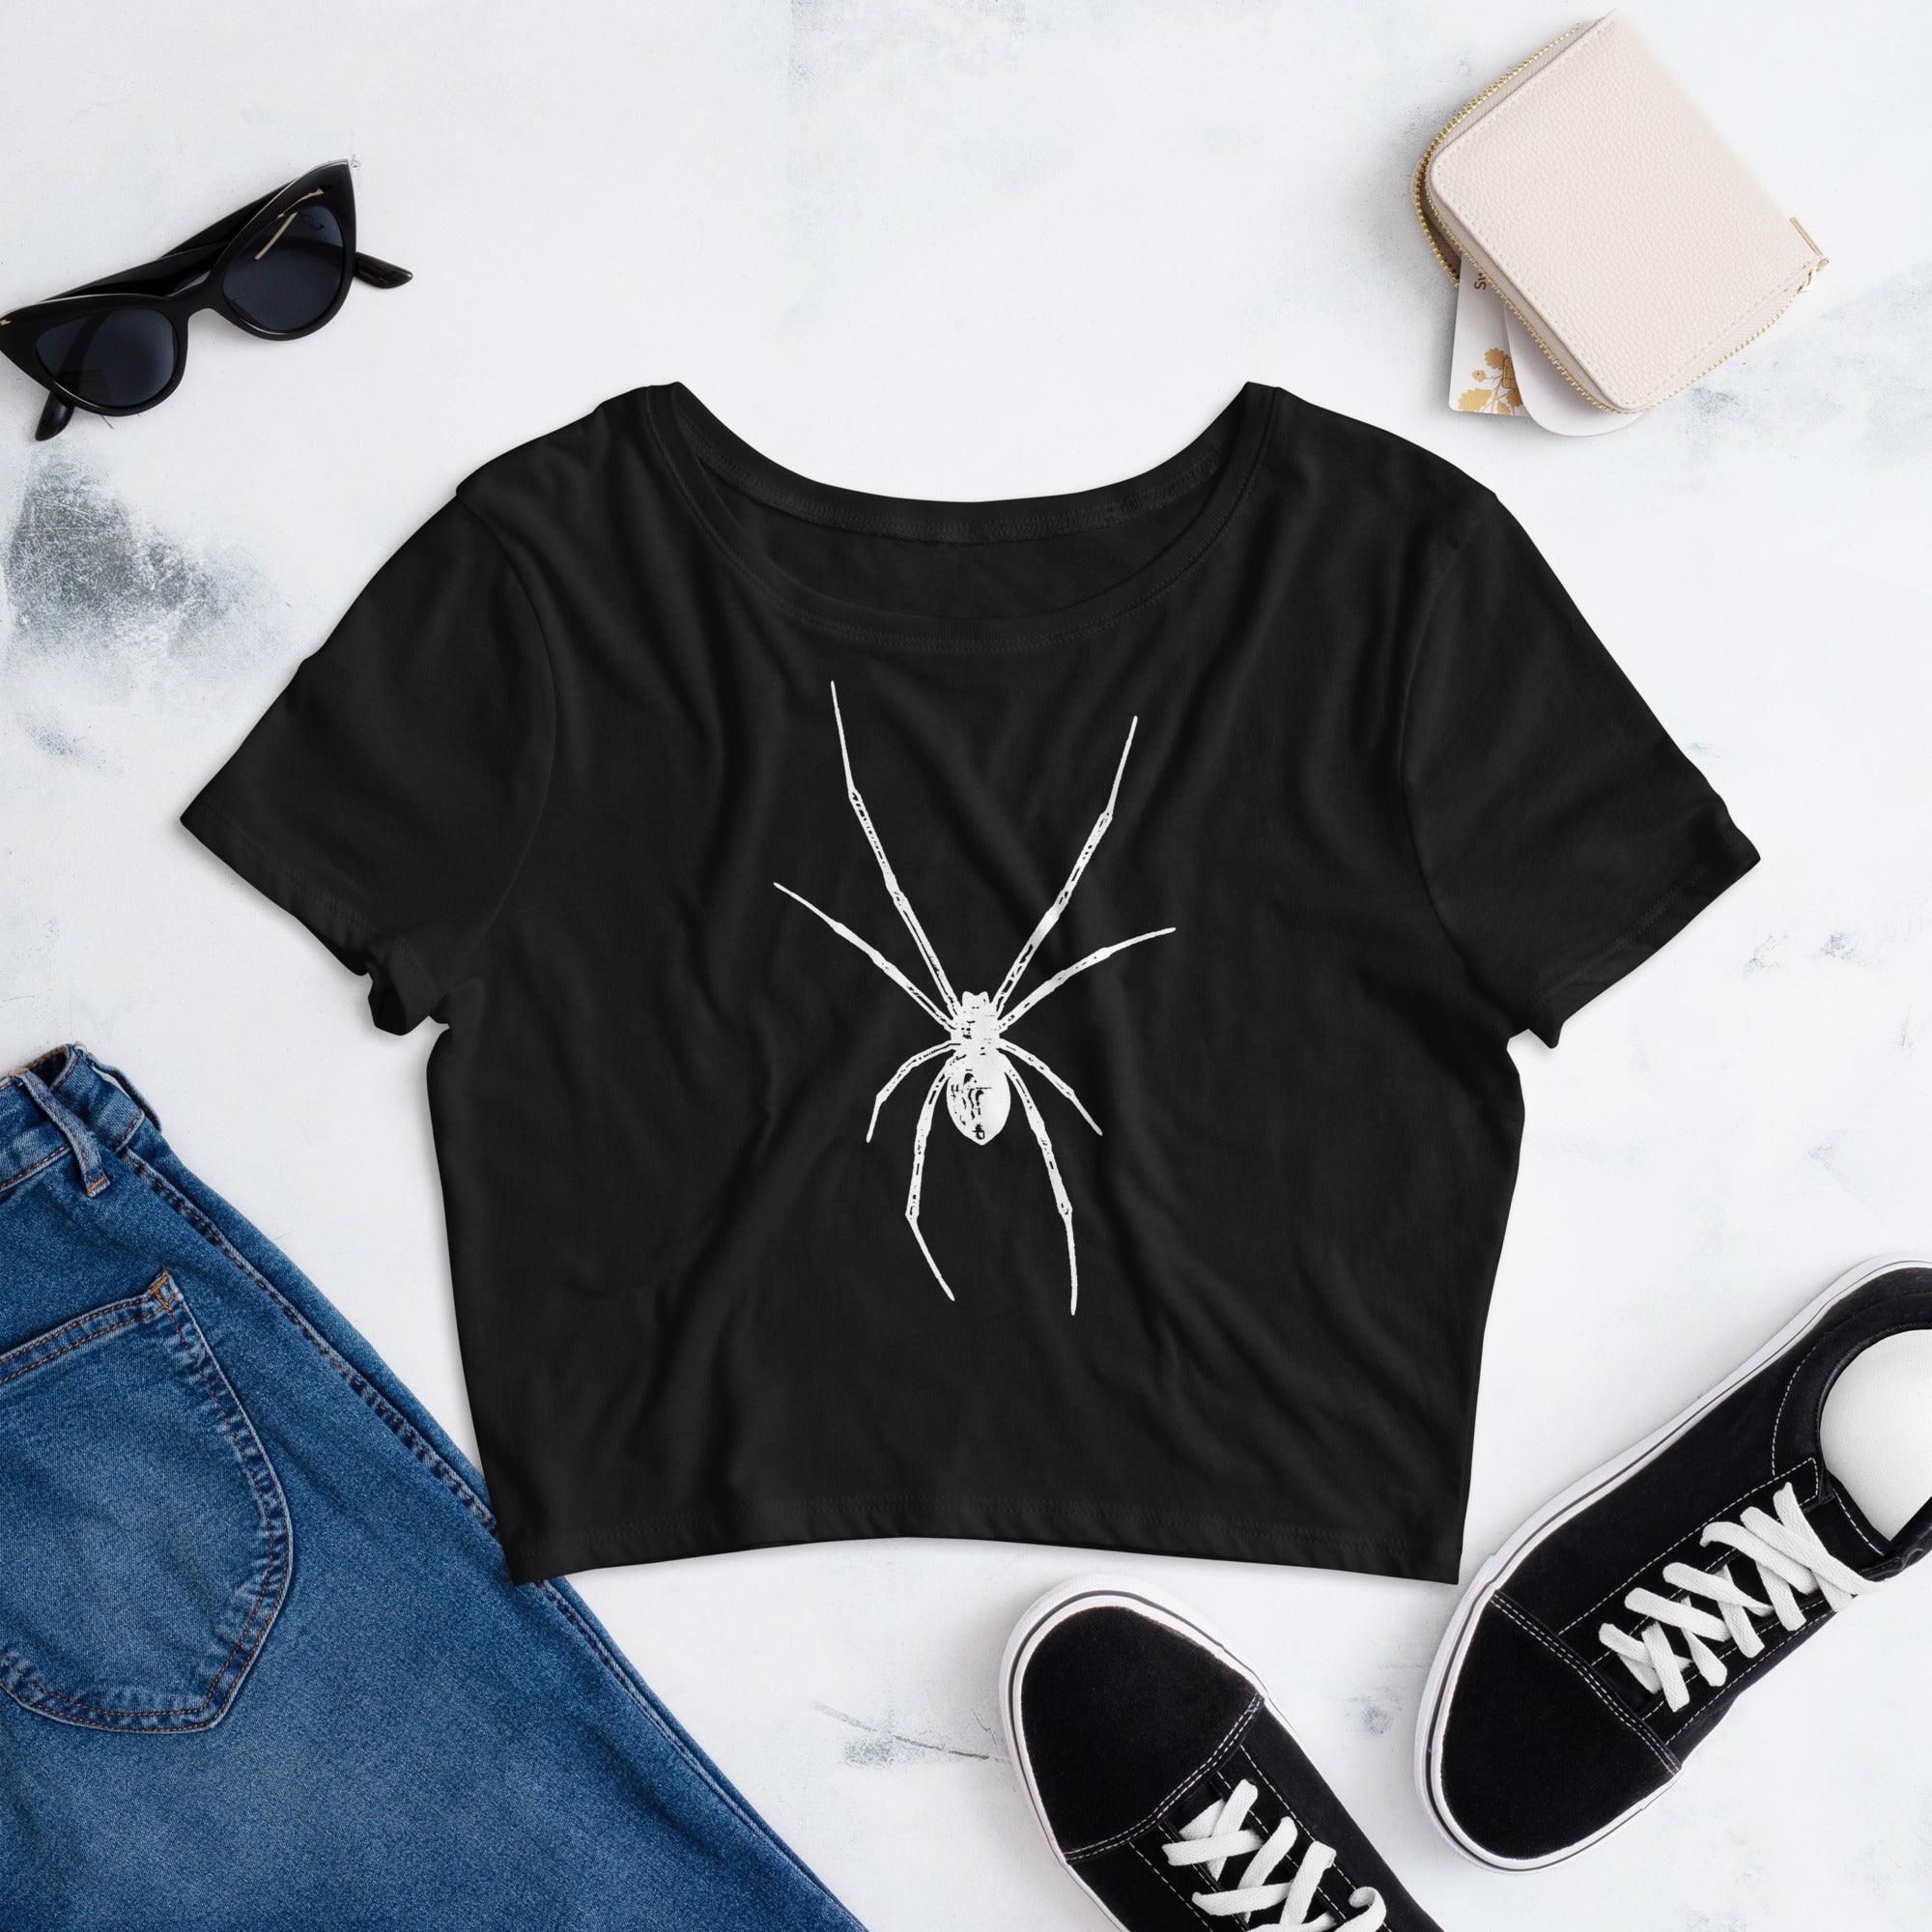 White Creepy Spider Arachnid Black Widow Women’s Crop Tee - Edge of Life Designs